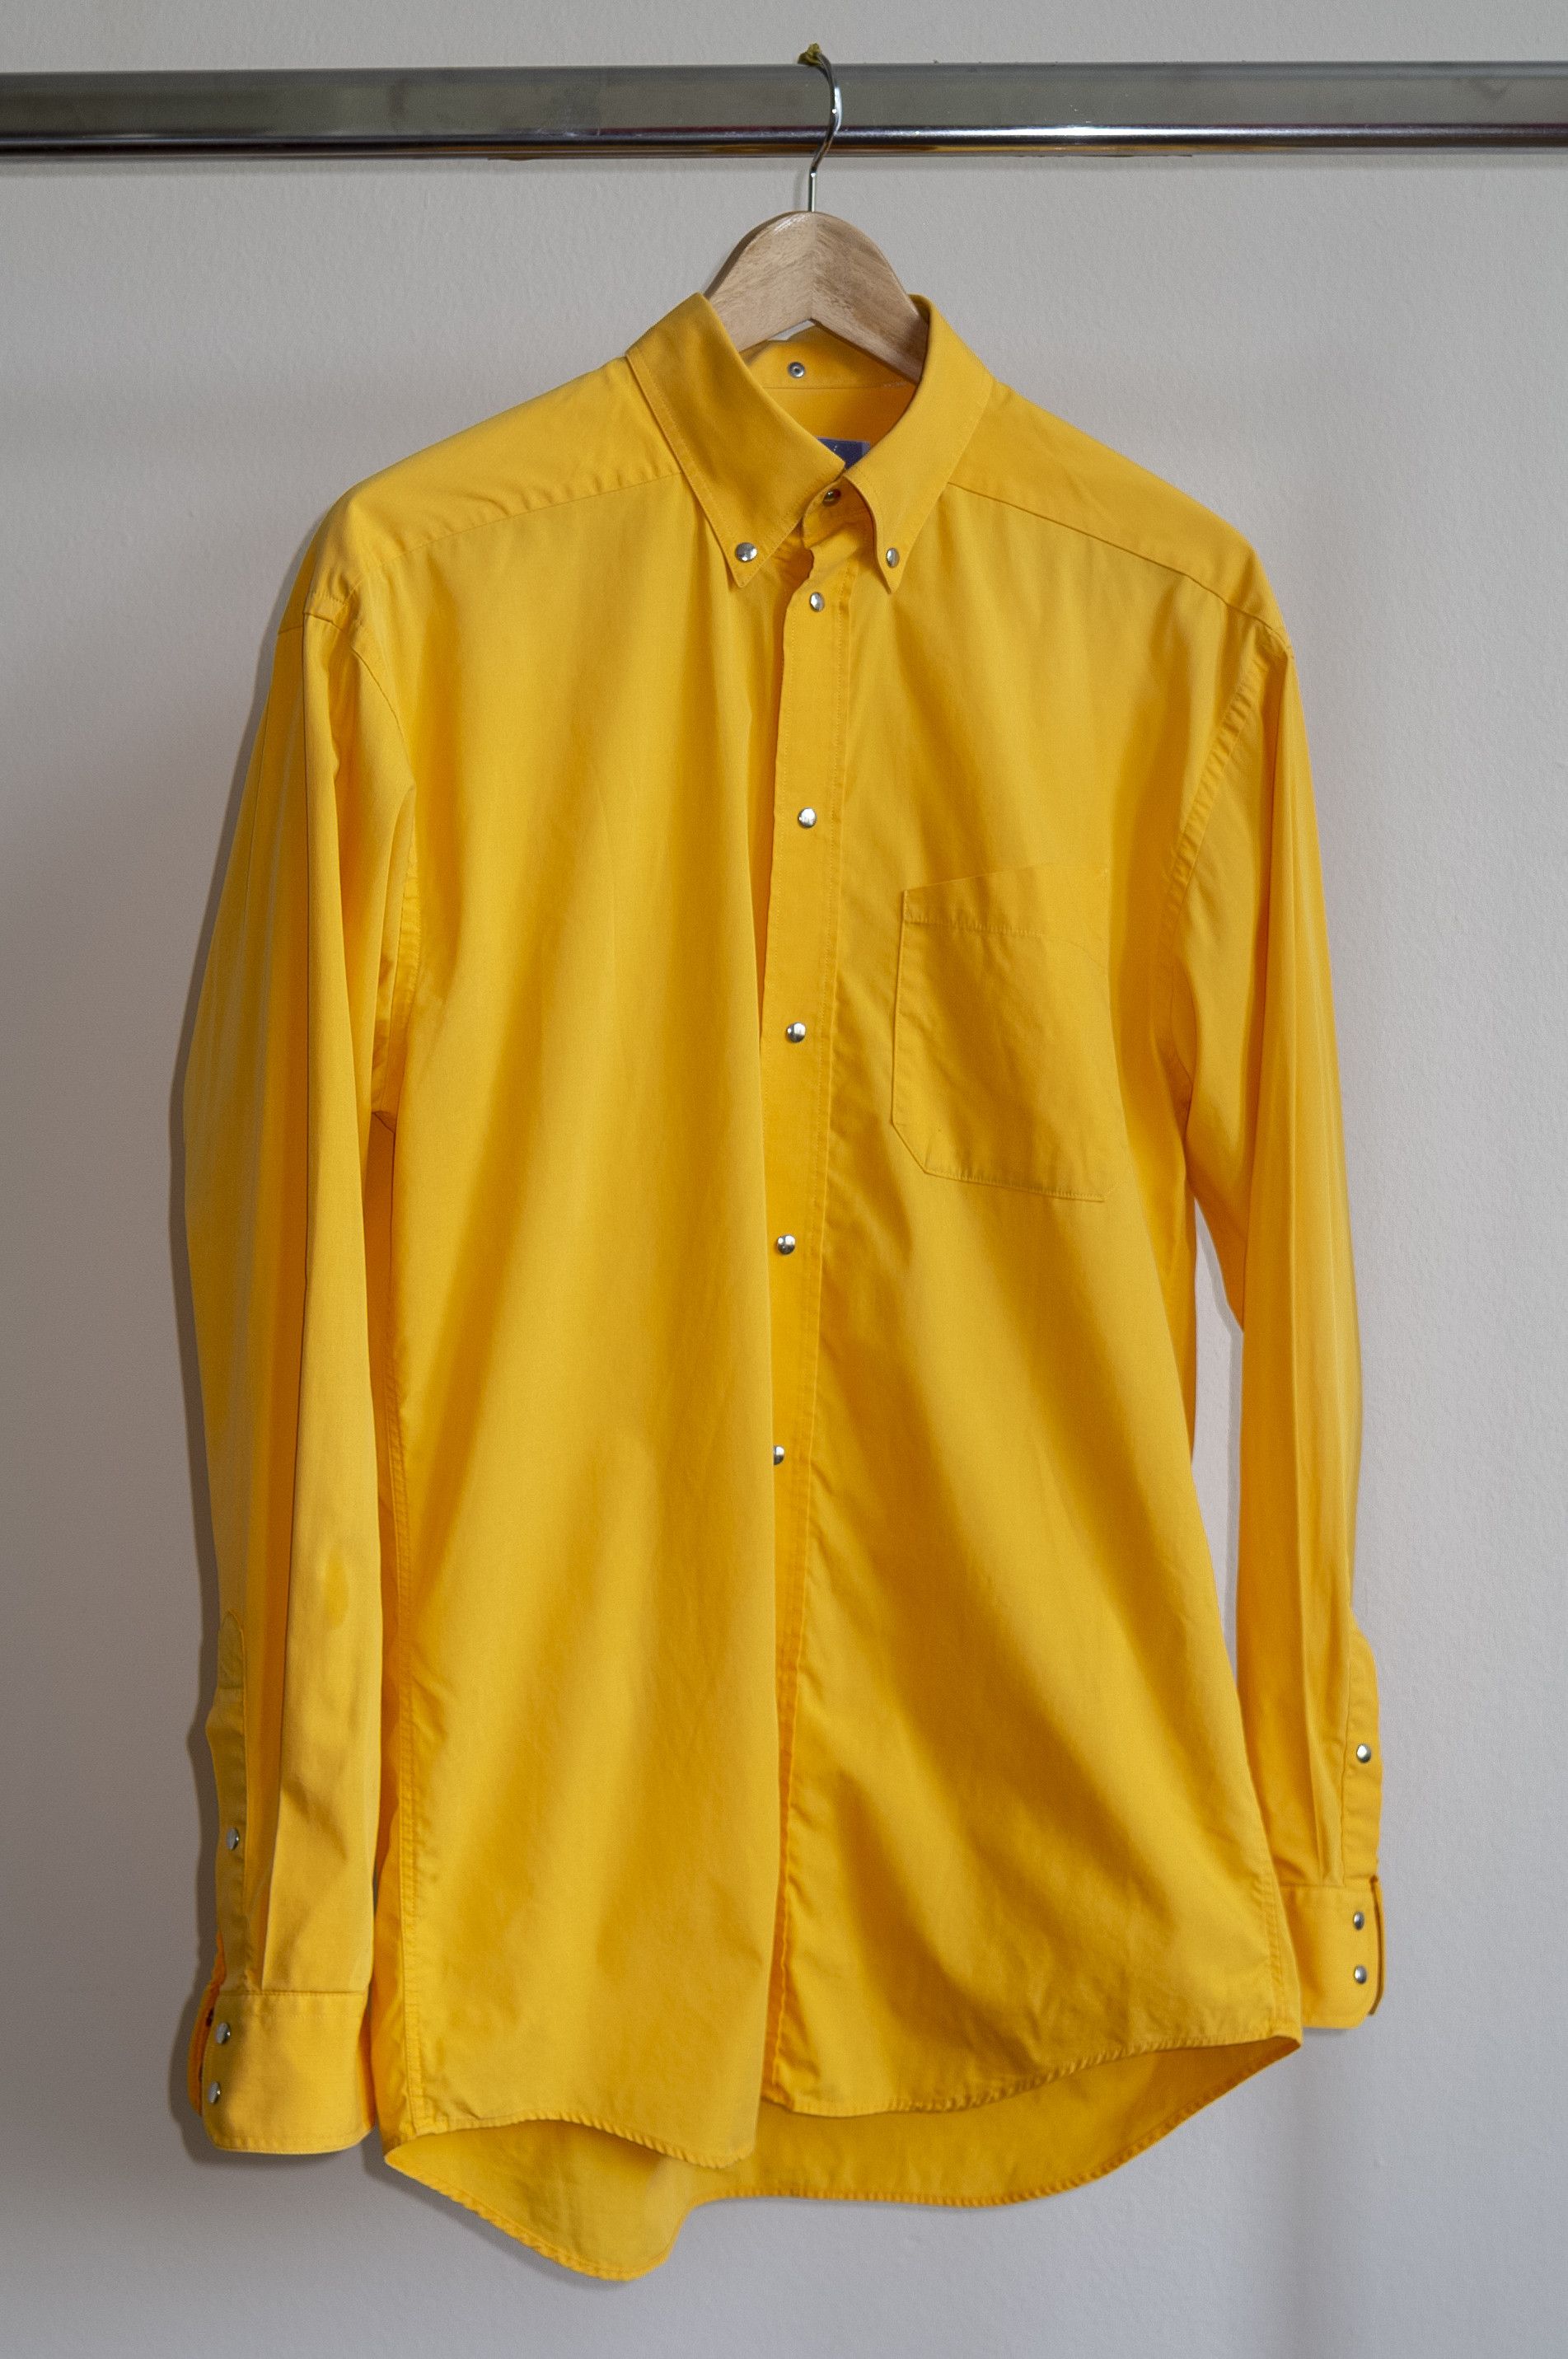 Thierry Mugler Cantaloupe Yellow Snap-up Thierry Mugler Shirt | Grailed